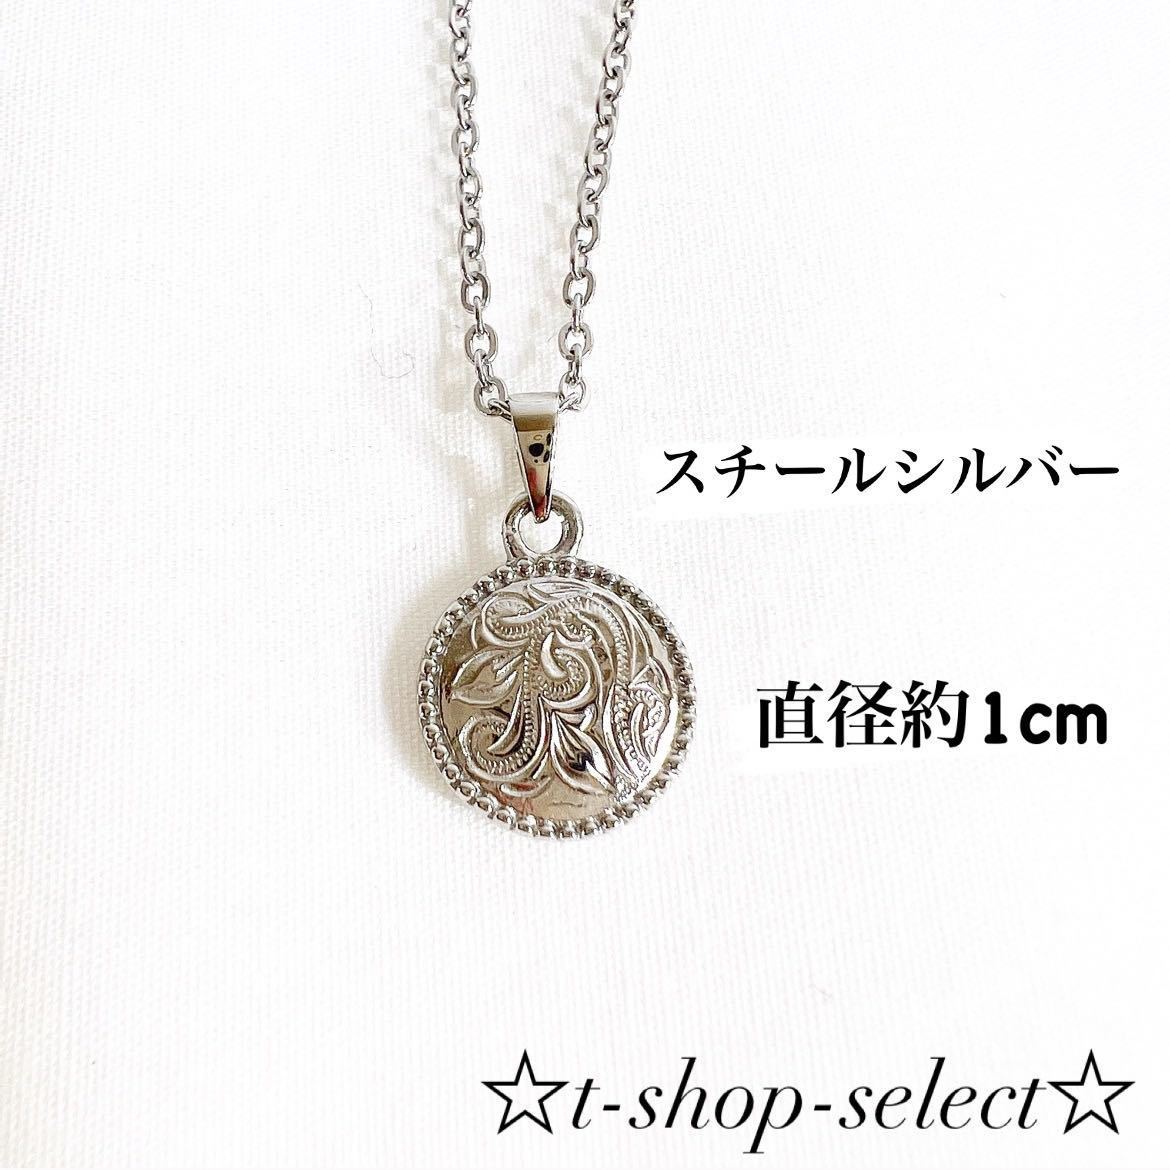 ☆Hawaiian jewelry☆ コイン形ネックレス サージカルステンレス